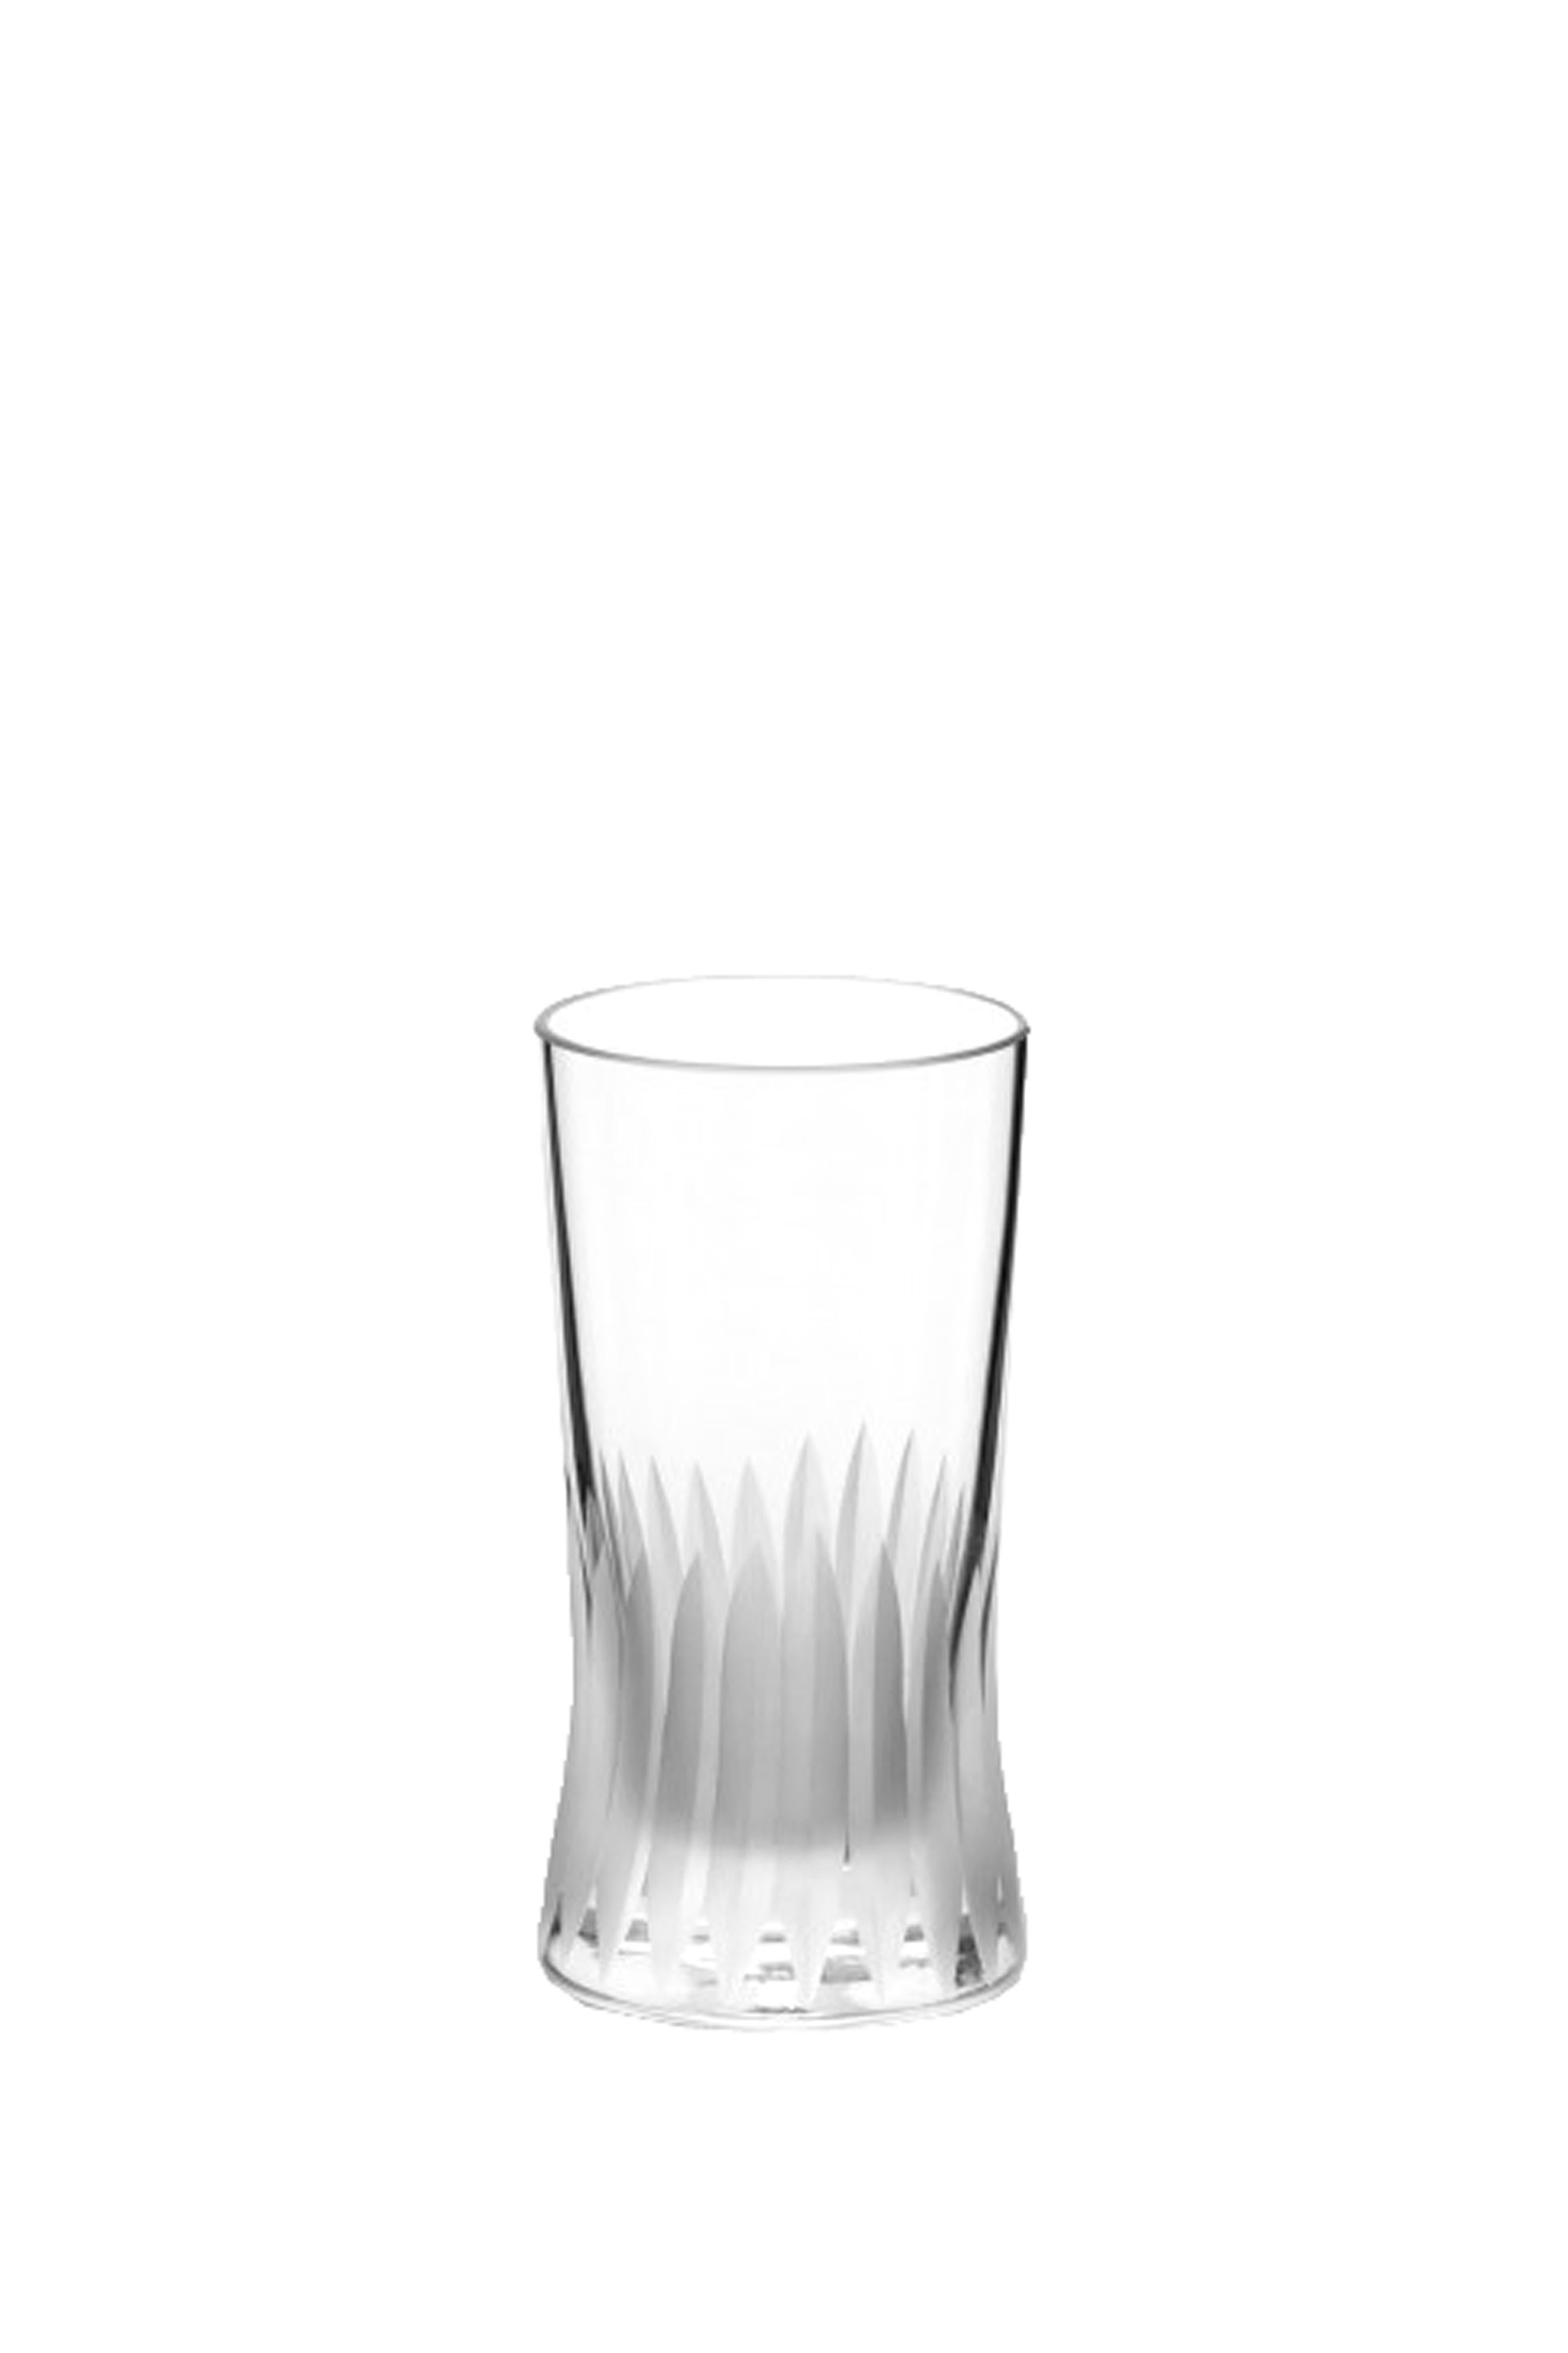 Hand-Crafted Martino Gamper Handmade Irish Crystal Water Glass 'Cuttings' Series For Sale